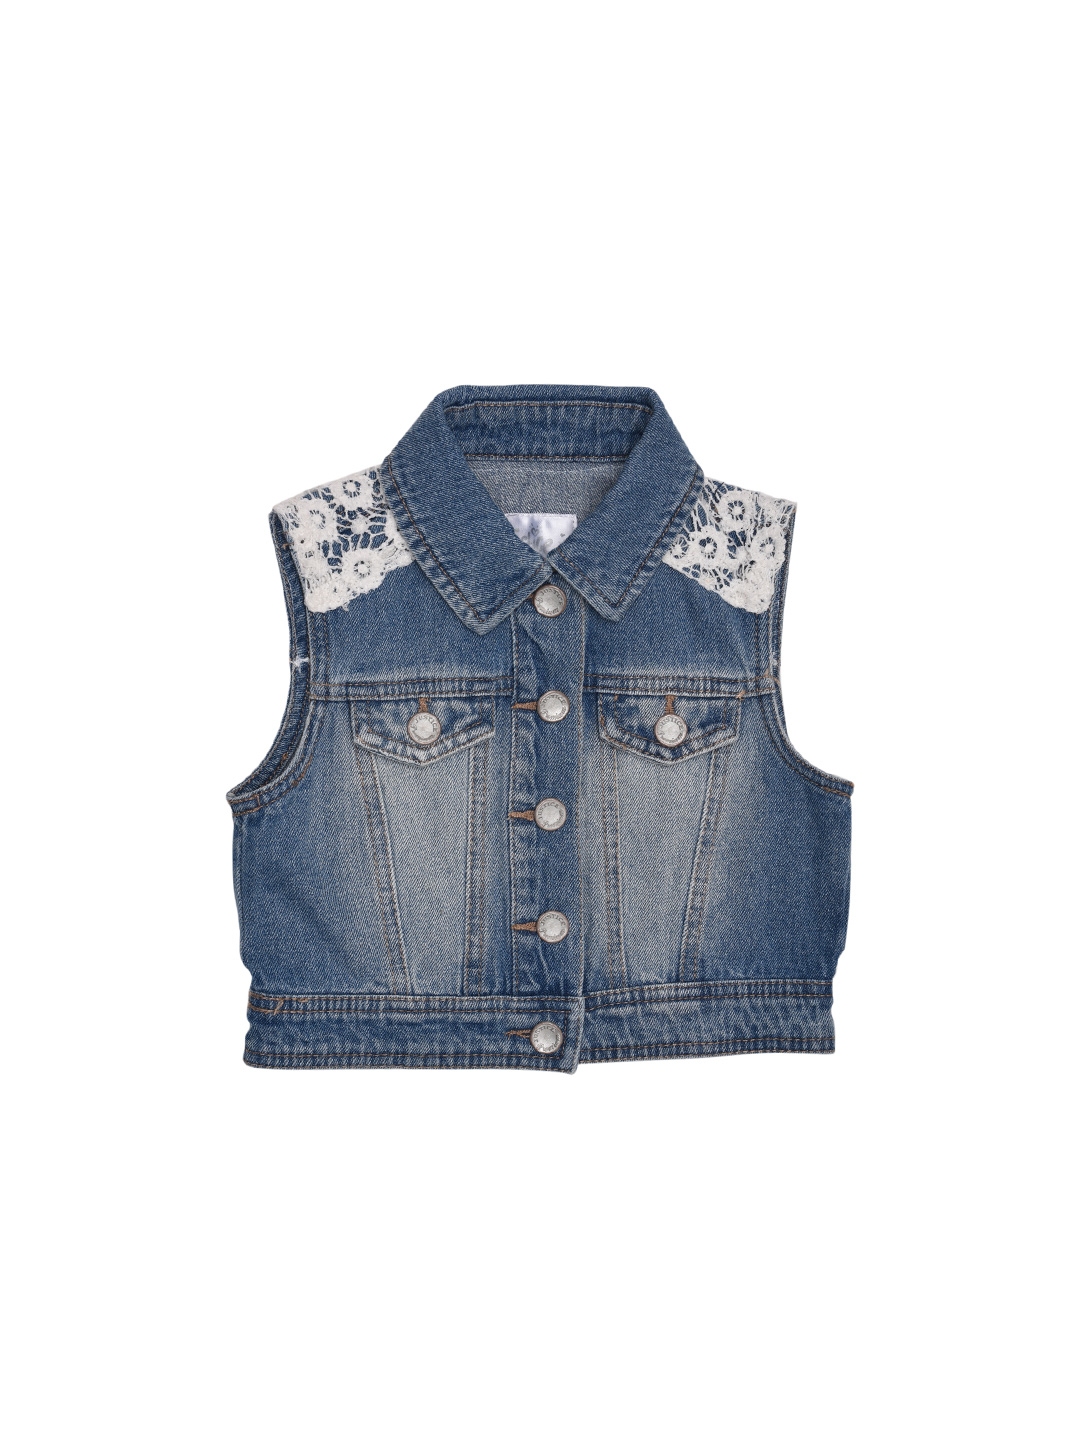 Buy JUSTICE Girls Blue Denim Jacket - Jackets for Girls 1683772 | Myntra